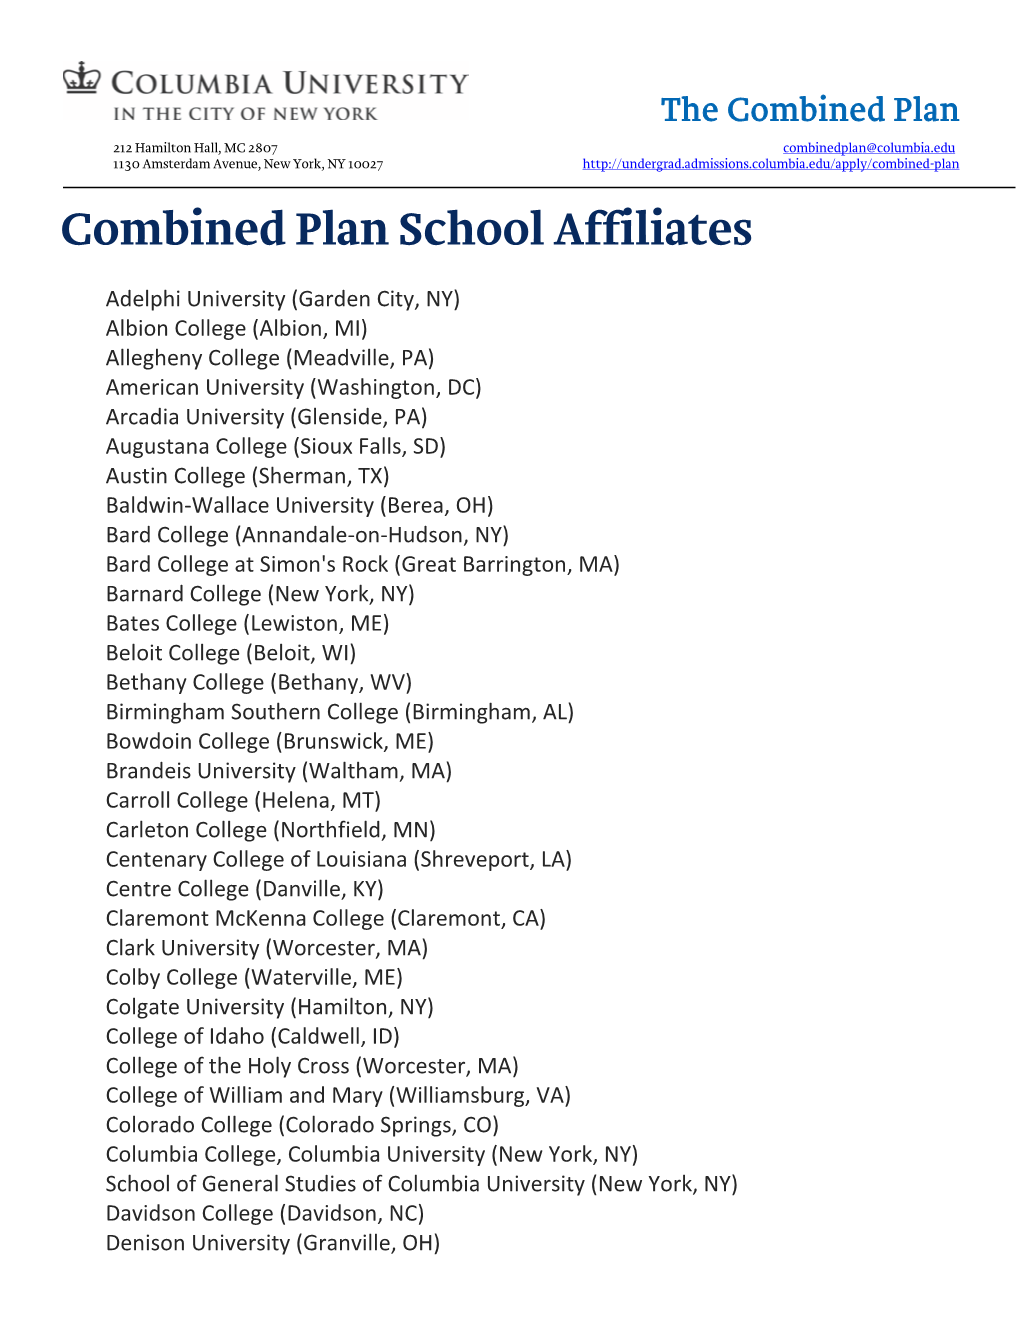 Combined Plan School Affiliates